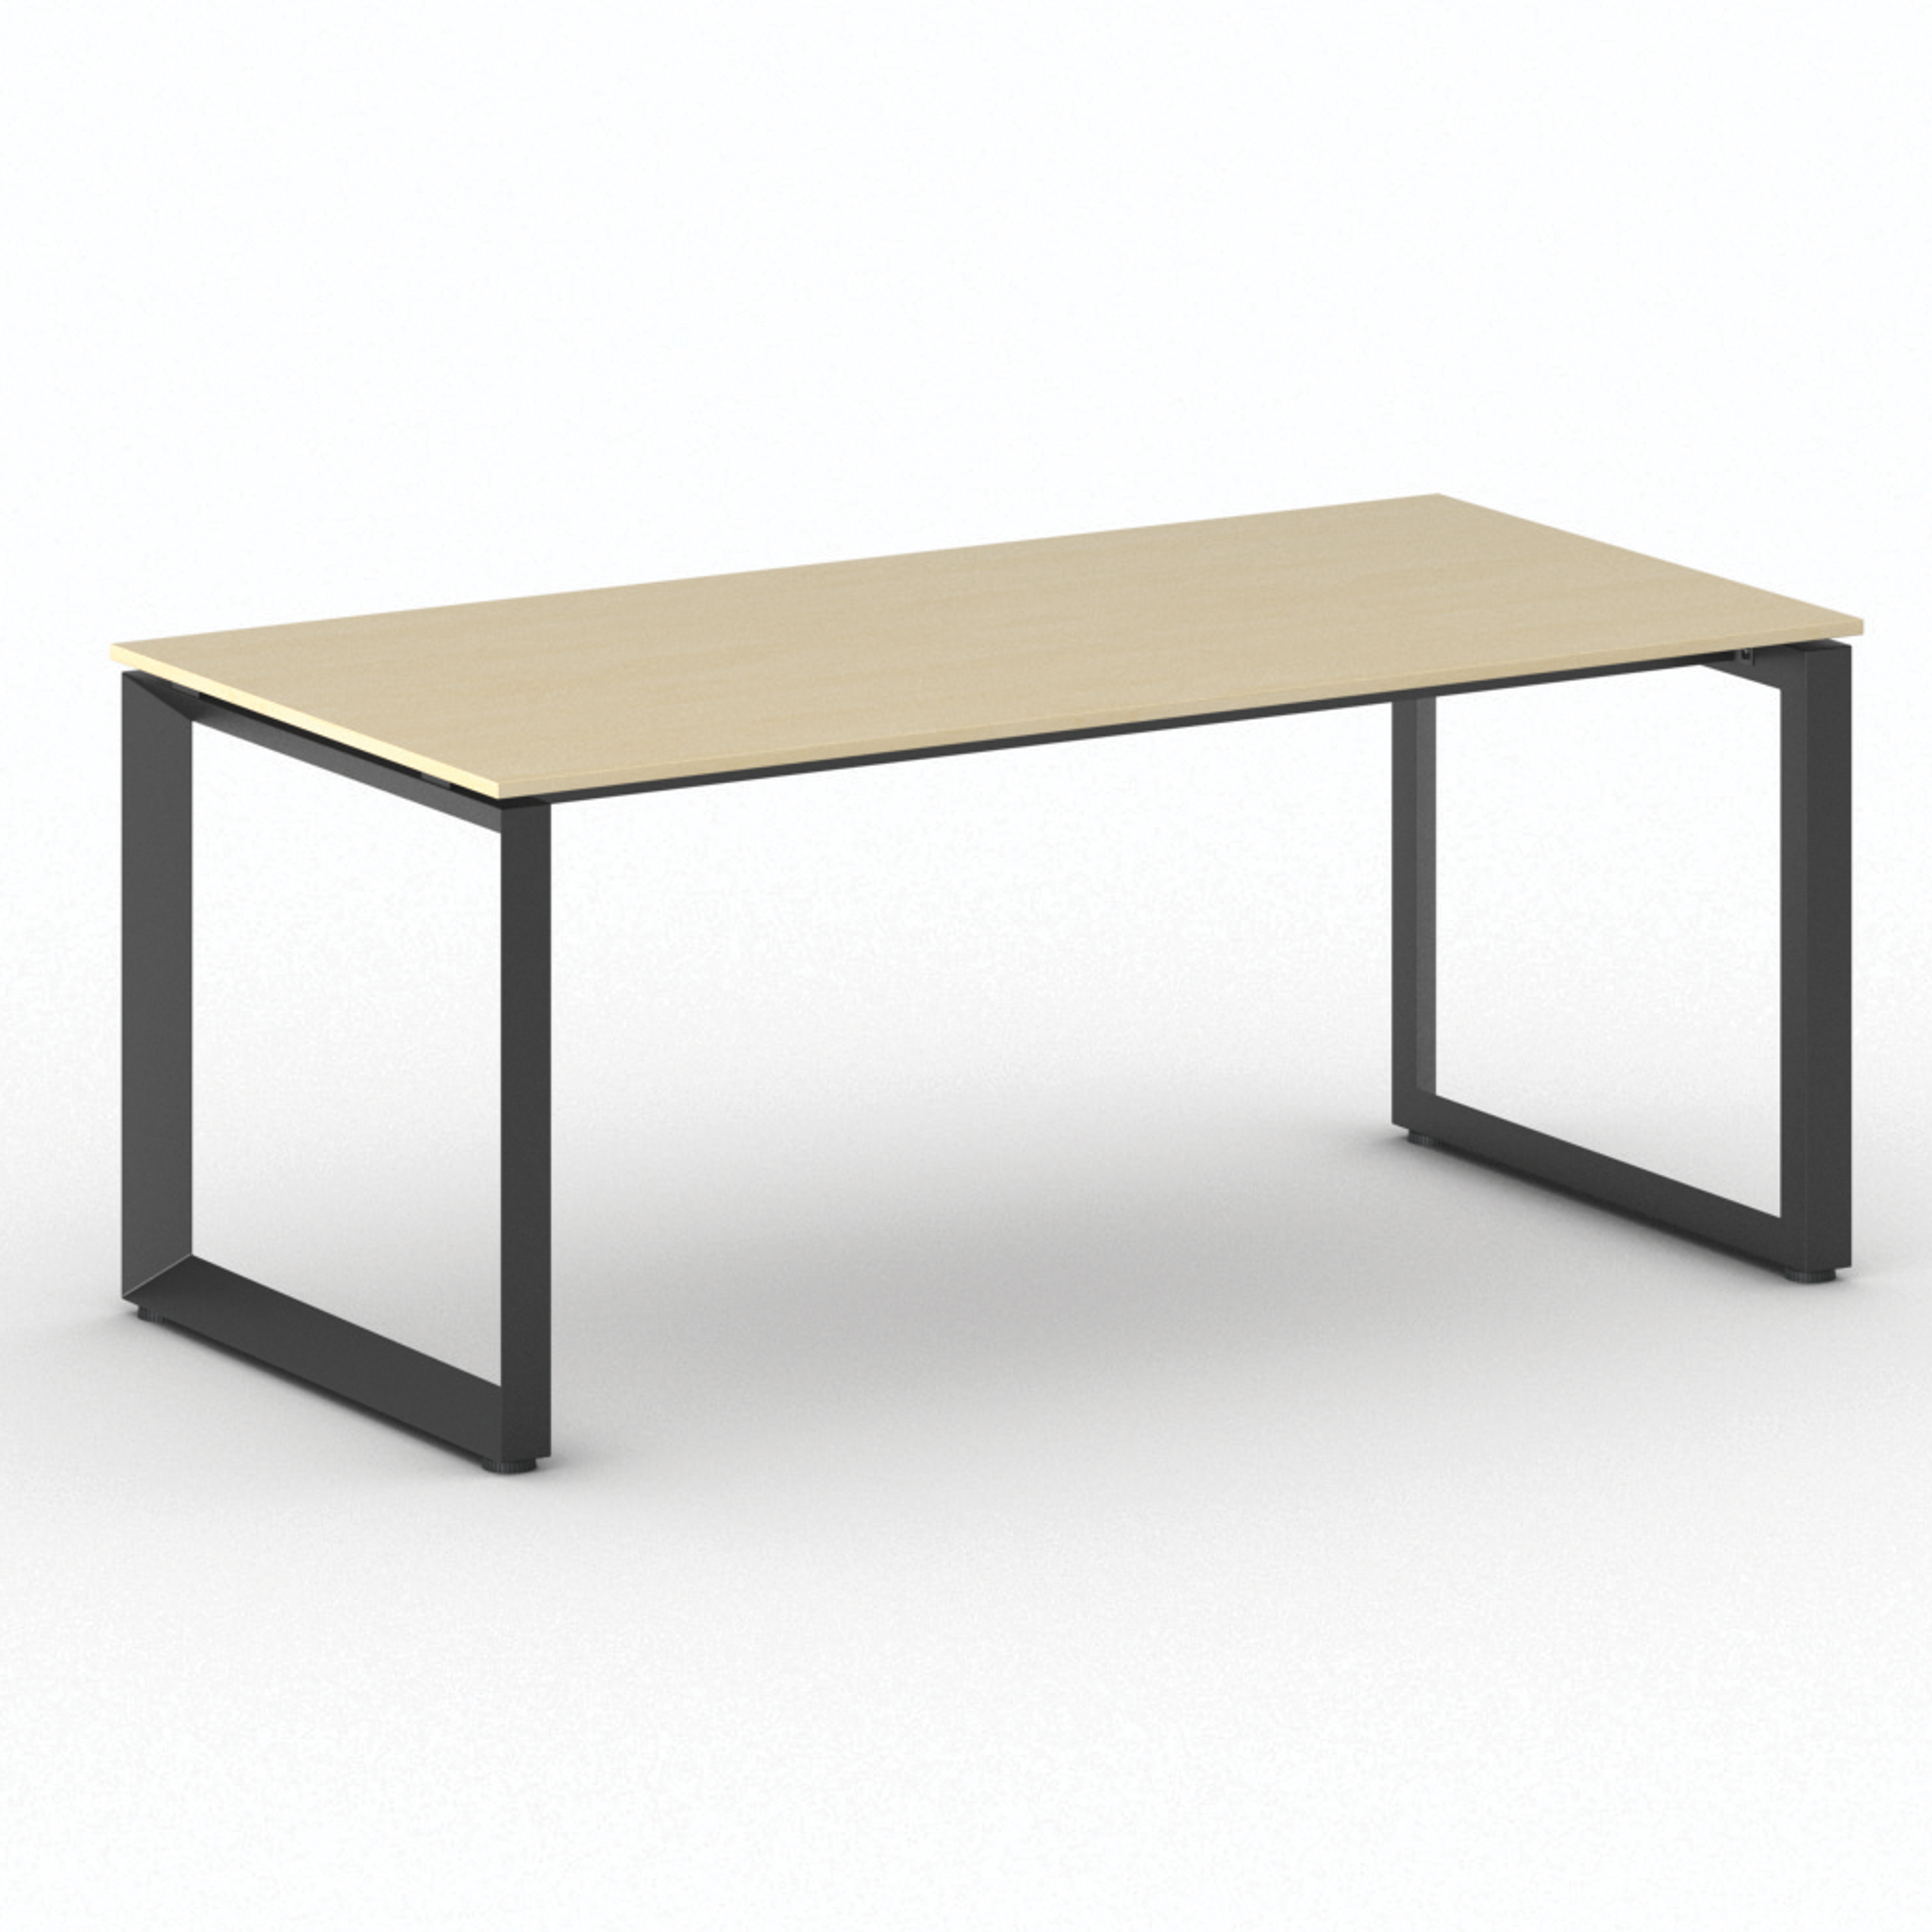 Kancelársky stôl PRIMO INSPIRE, čierna podnož, 1800 x 900 mm, breza